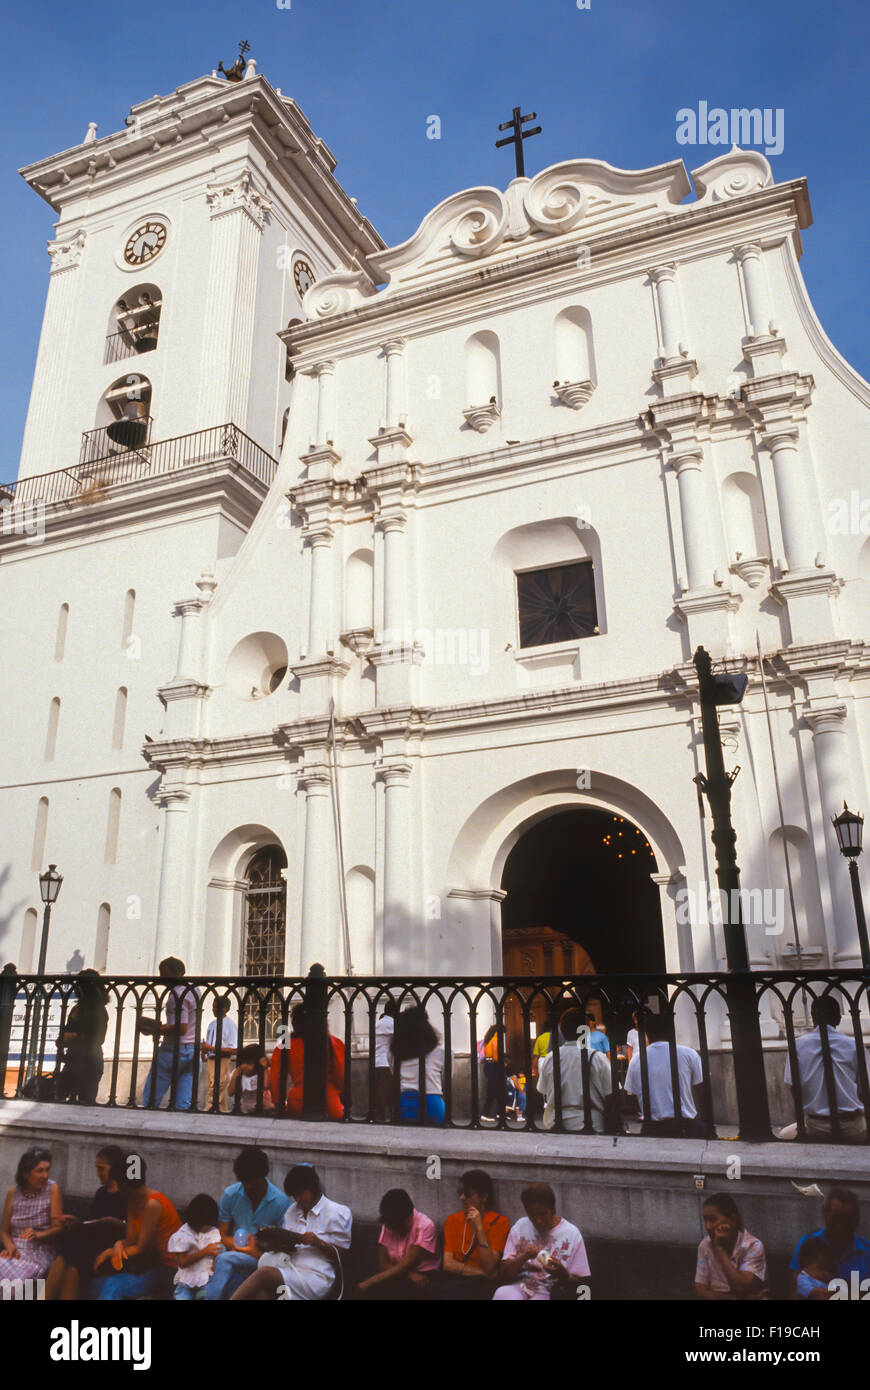 CARACAS, VENEZUELA - Cathedral of Caracas, in Plaza Bolivar. 1988 Stock Photo